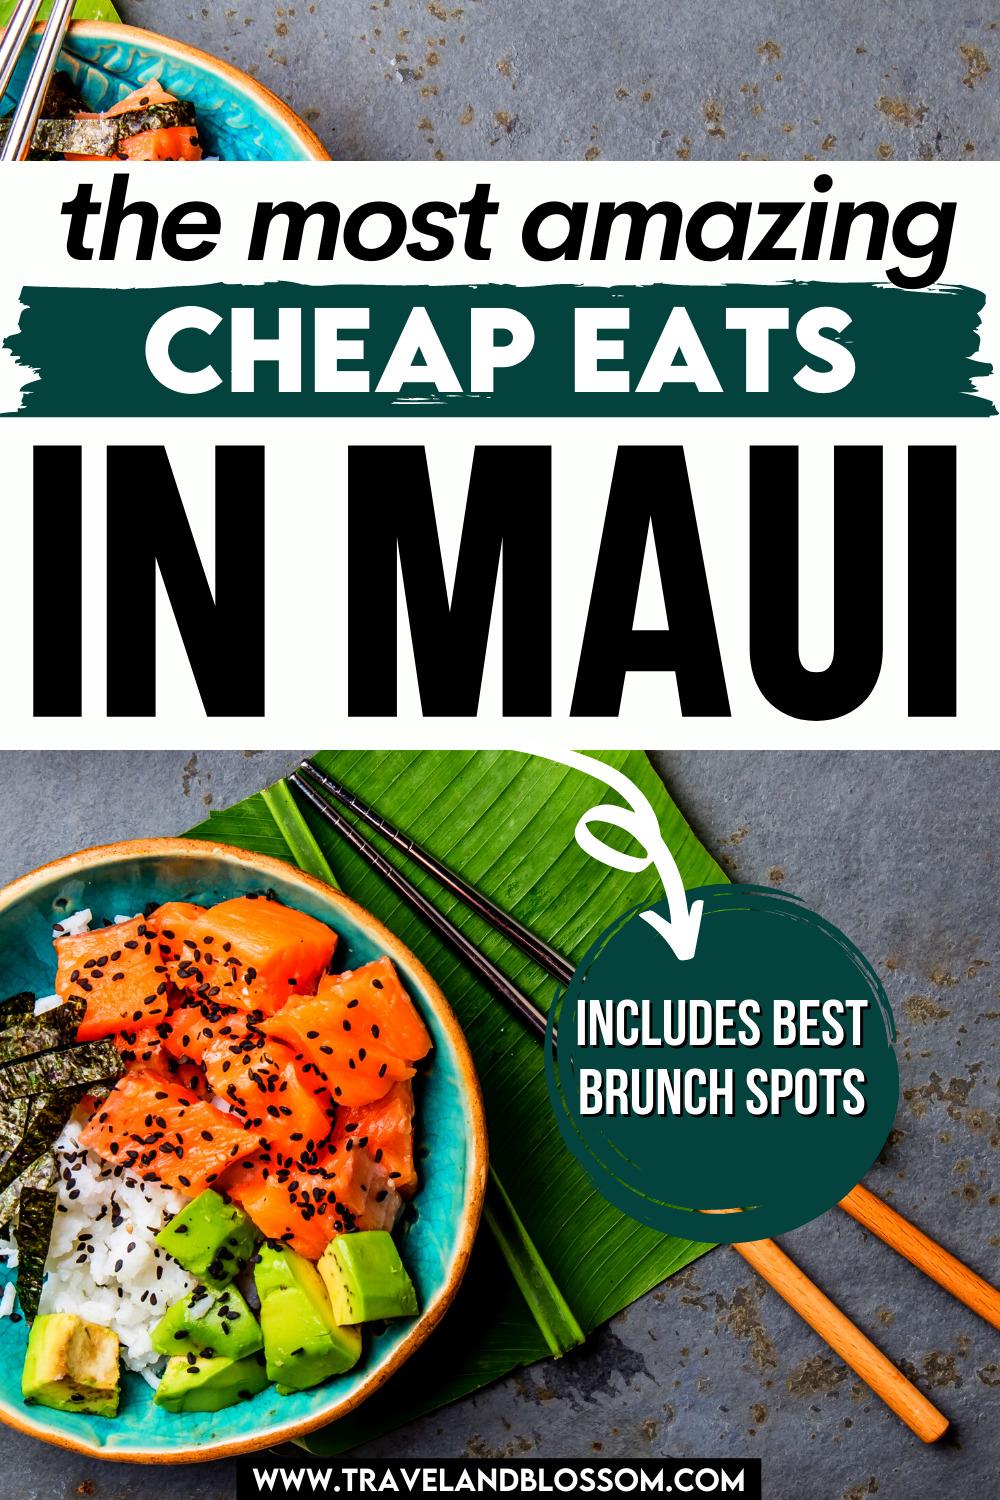 10 Amazing Cheap Eats in Maui